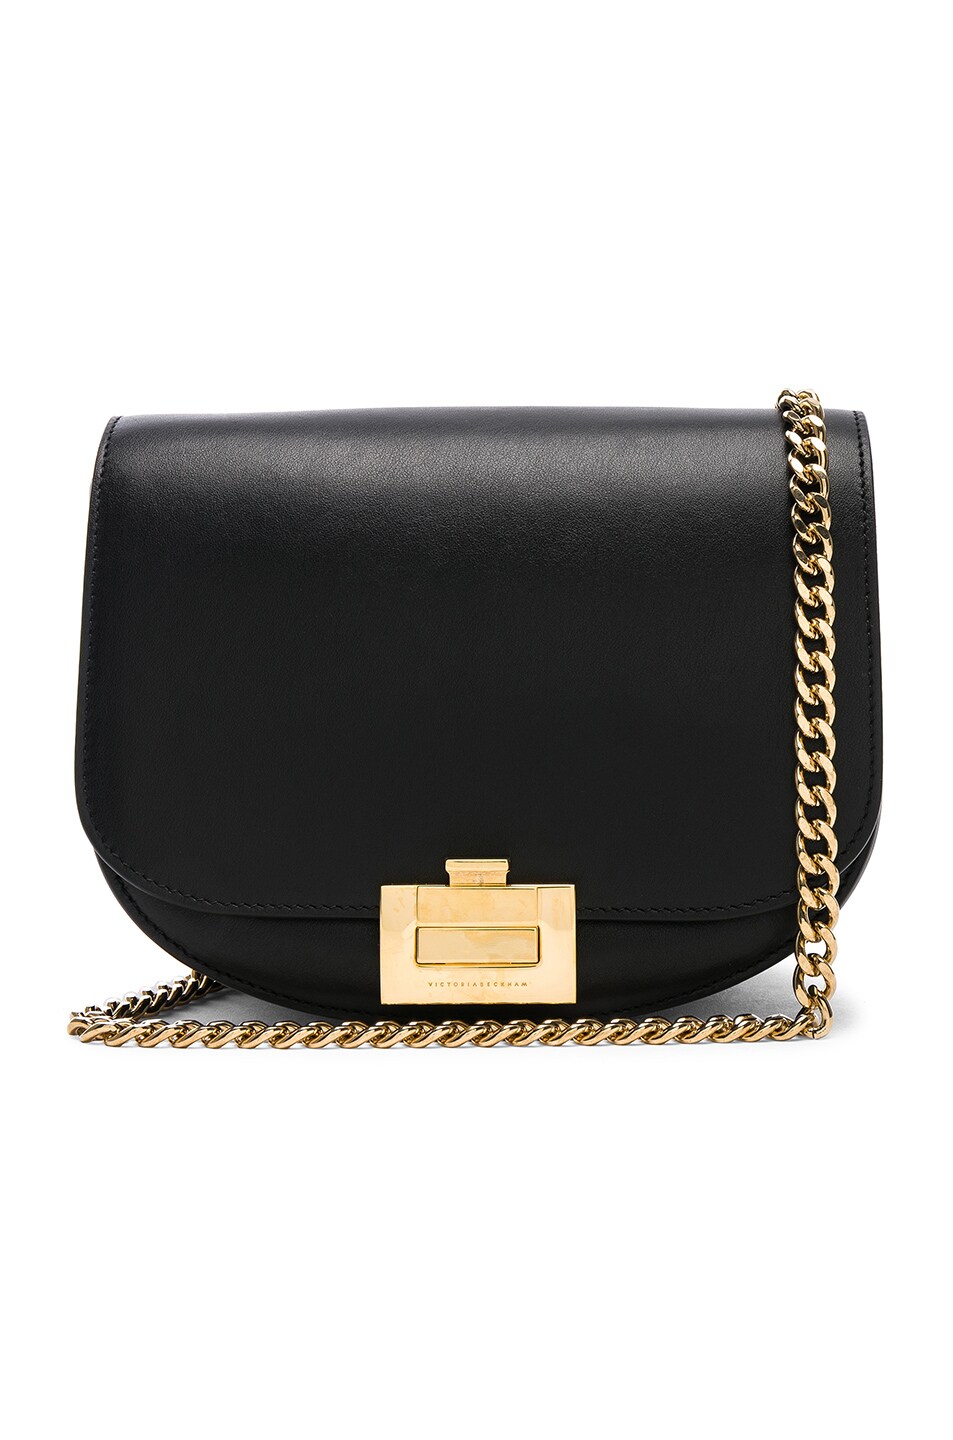 Image 1 of Victoria Beckham Box with Chain Handbag in Black